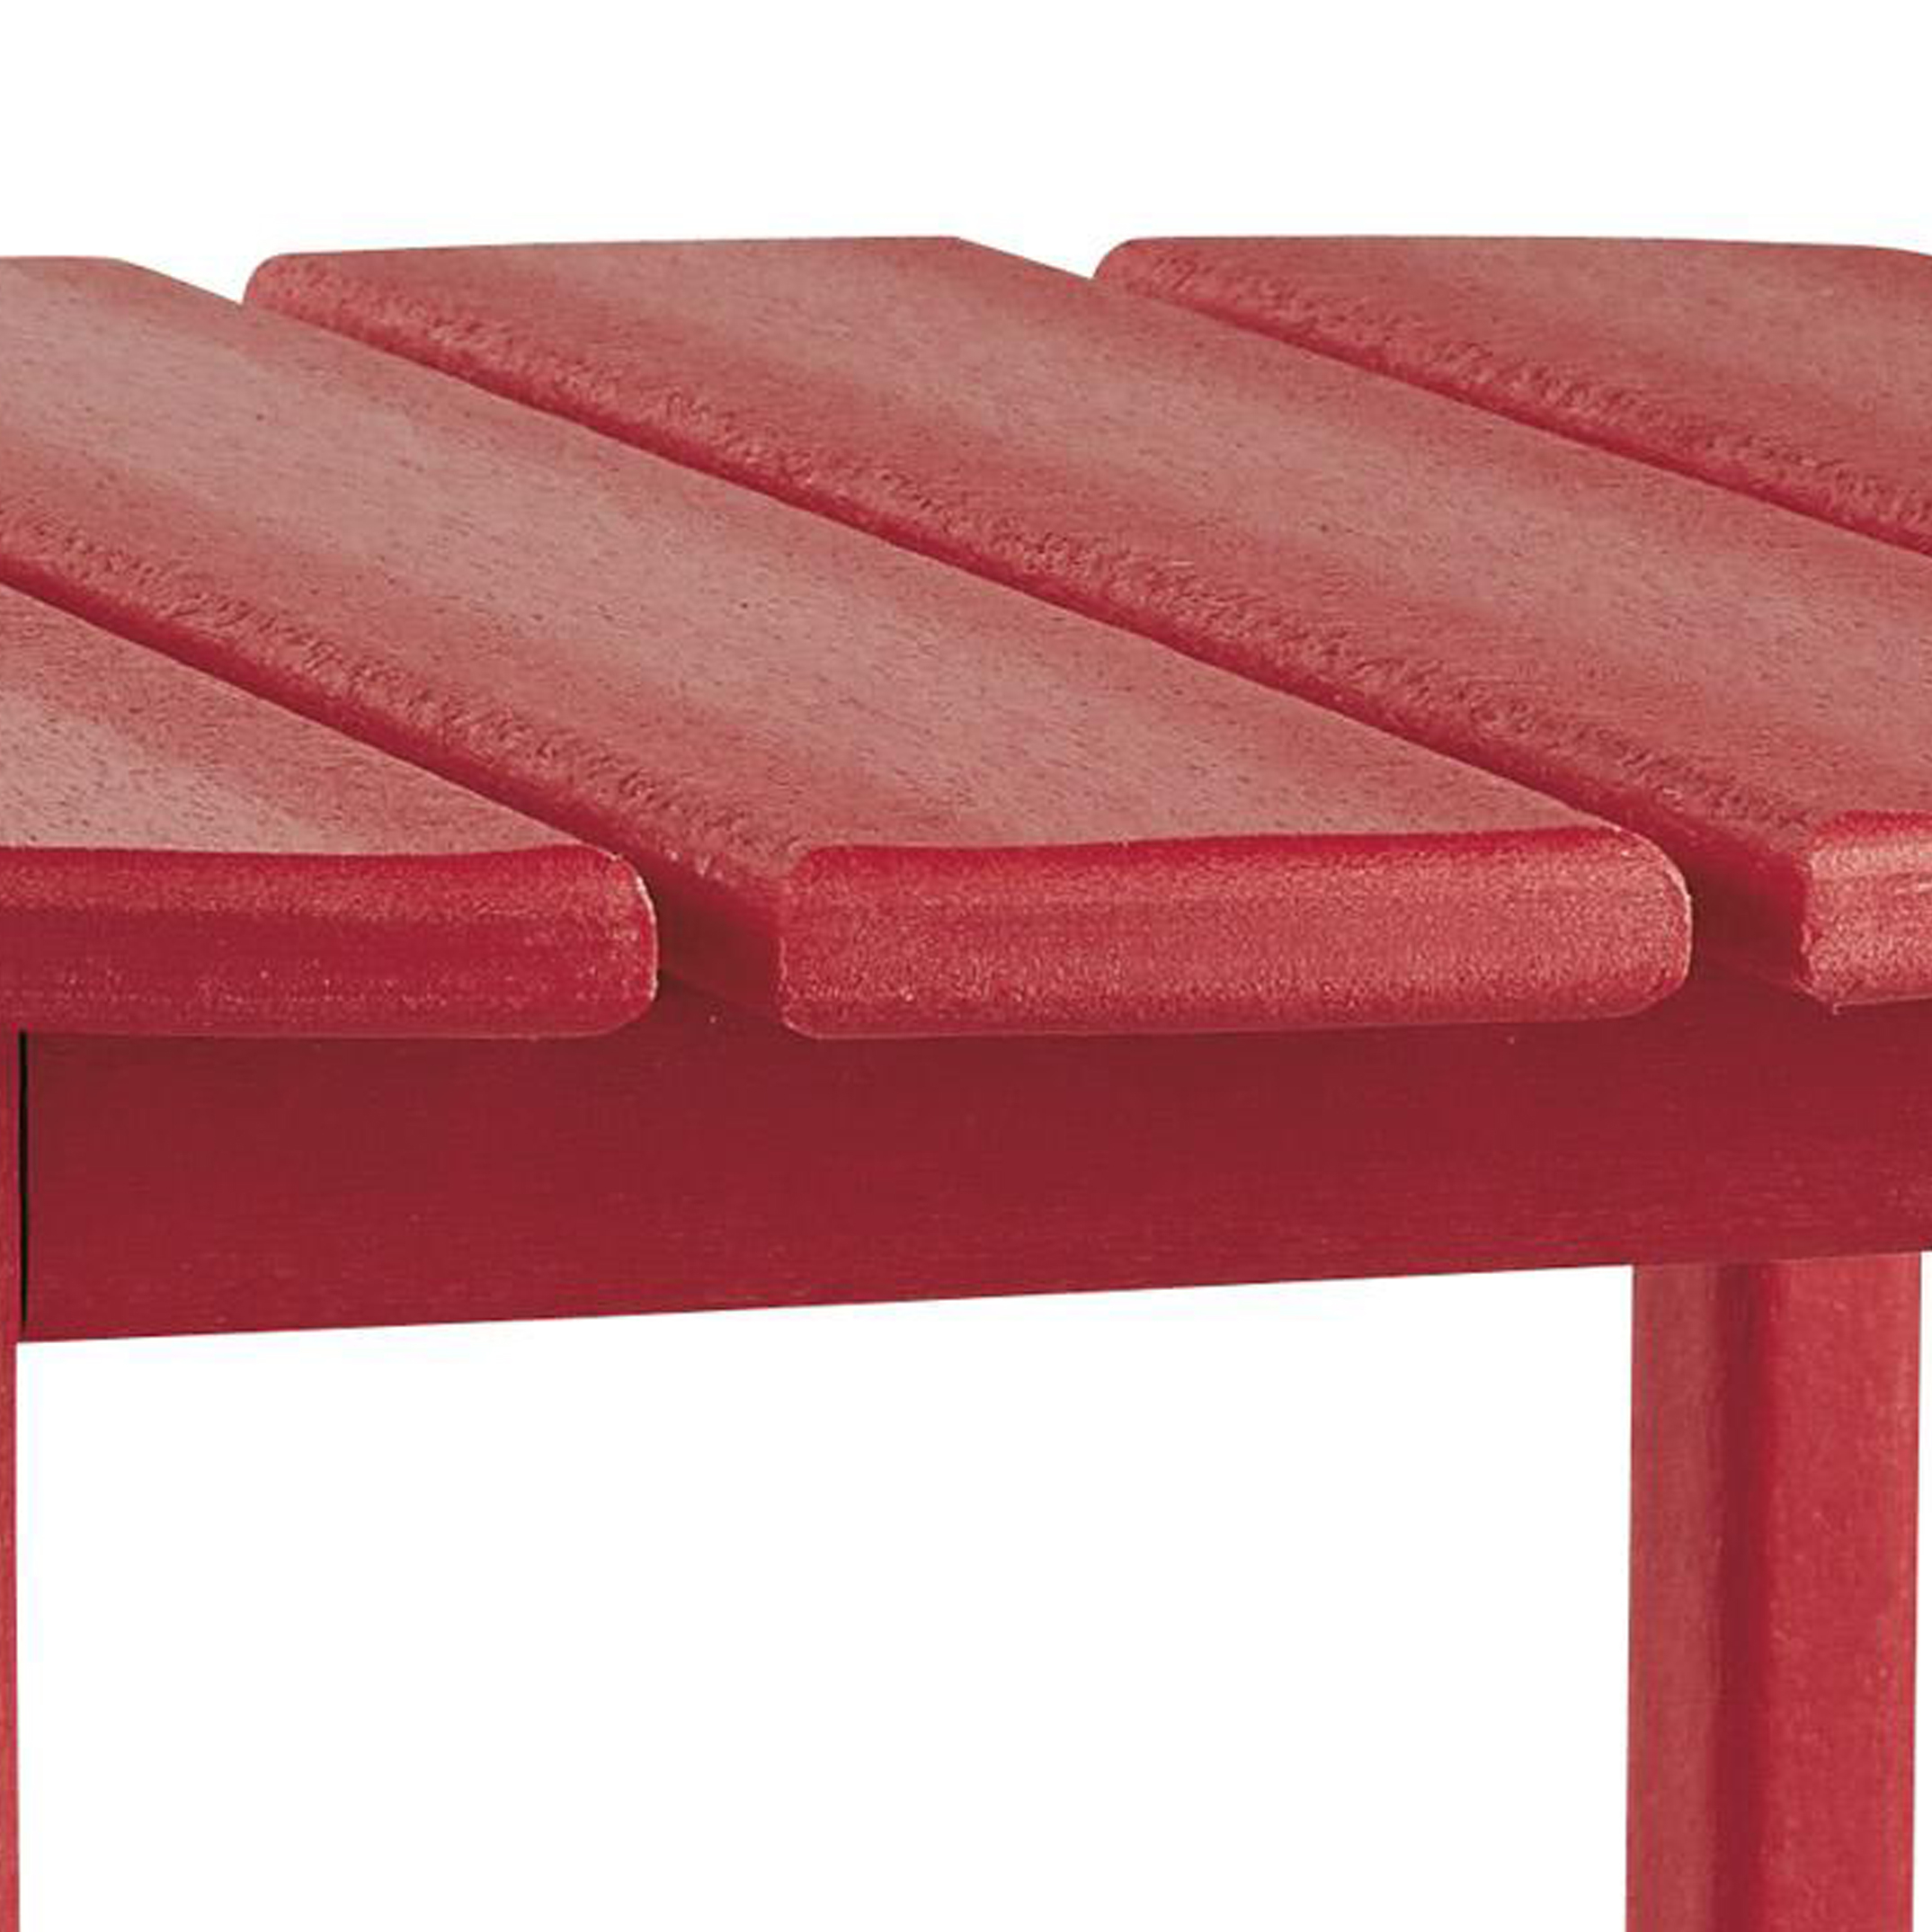 Slatted Rectangular Hard Plastic End Table With Straight Legs, Red- Saltoro Sherpi